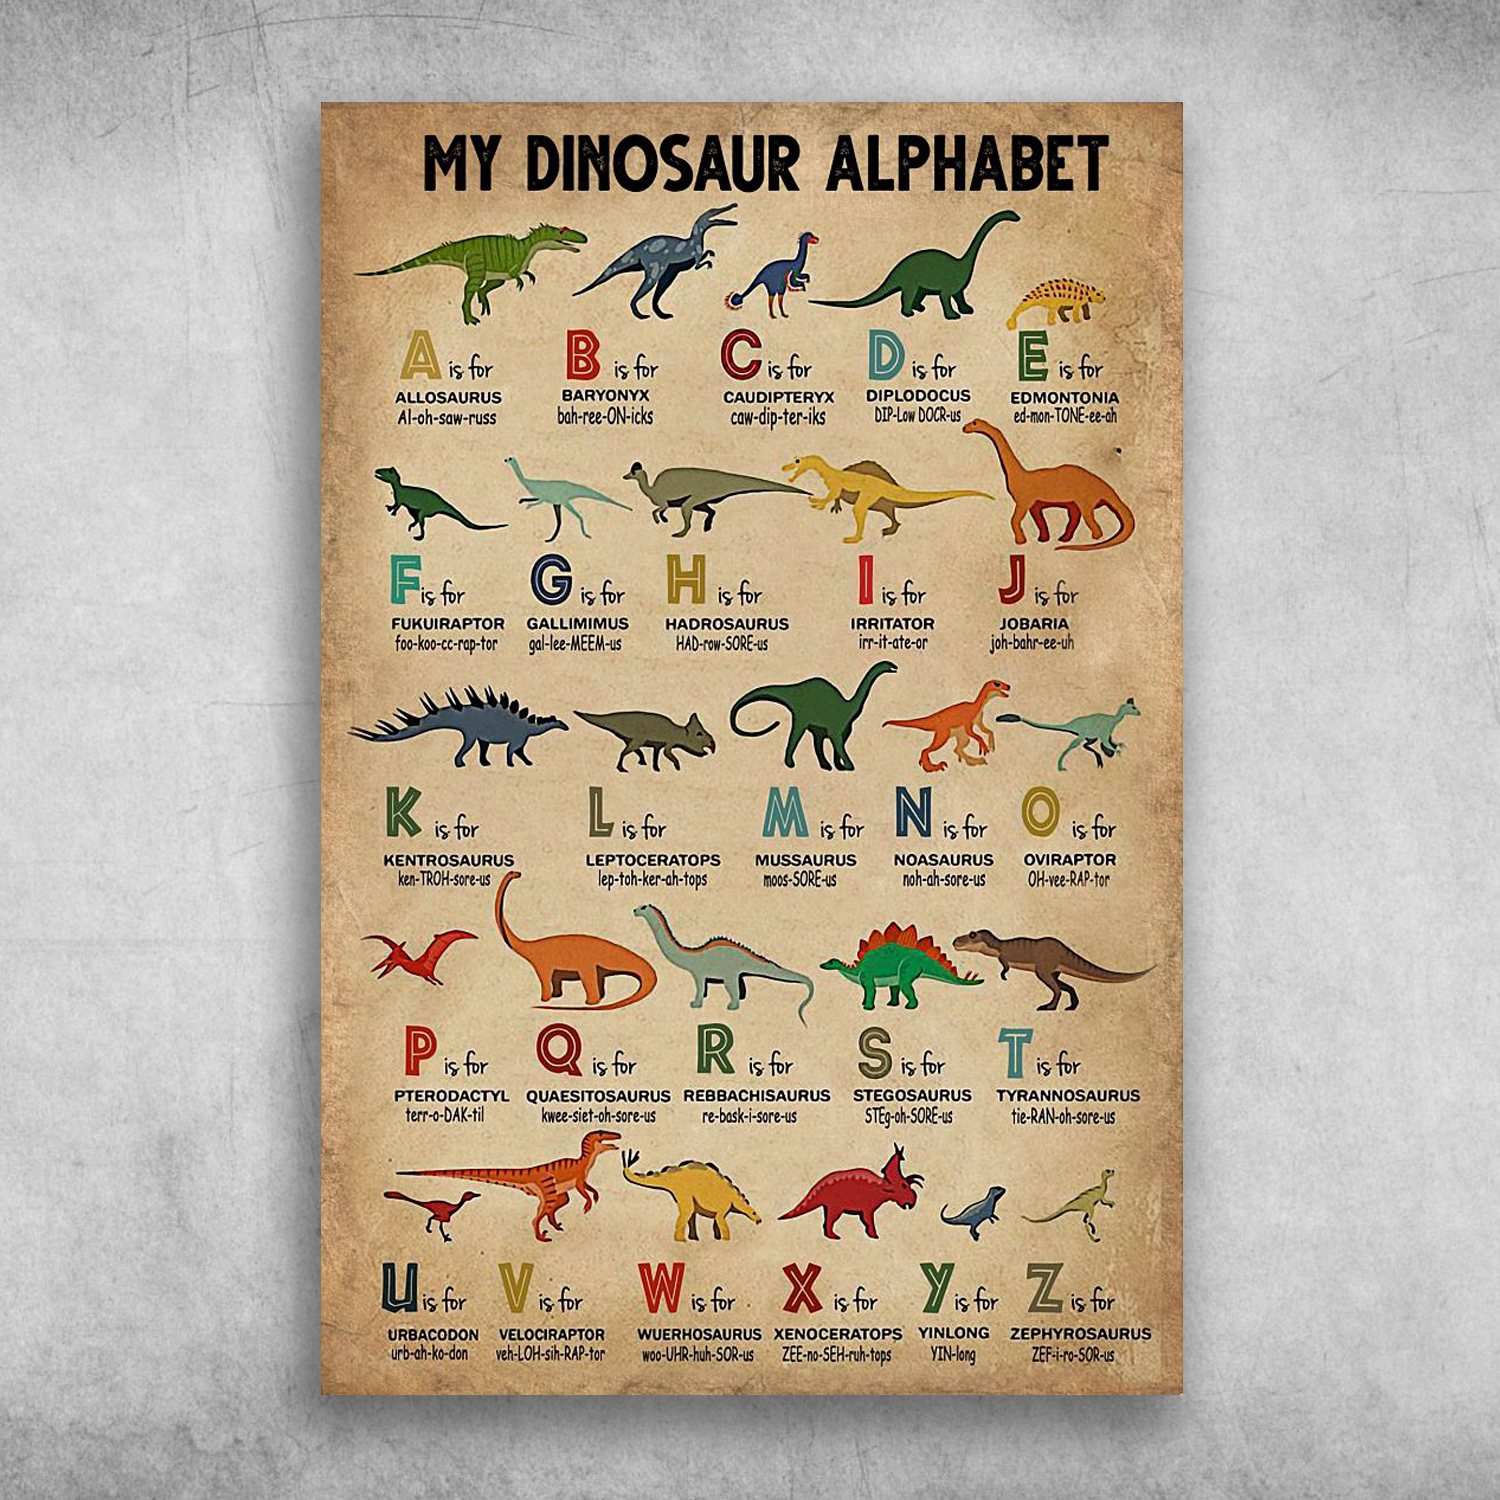 My Dinosaur Alphabet Allosaurus Baryonyx